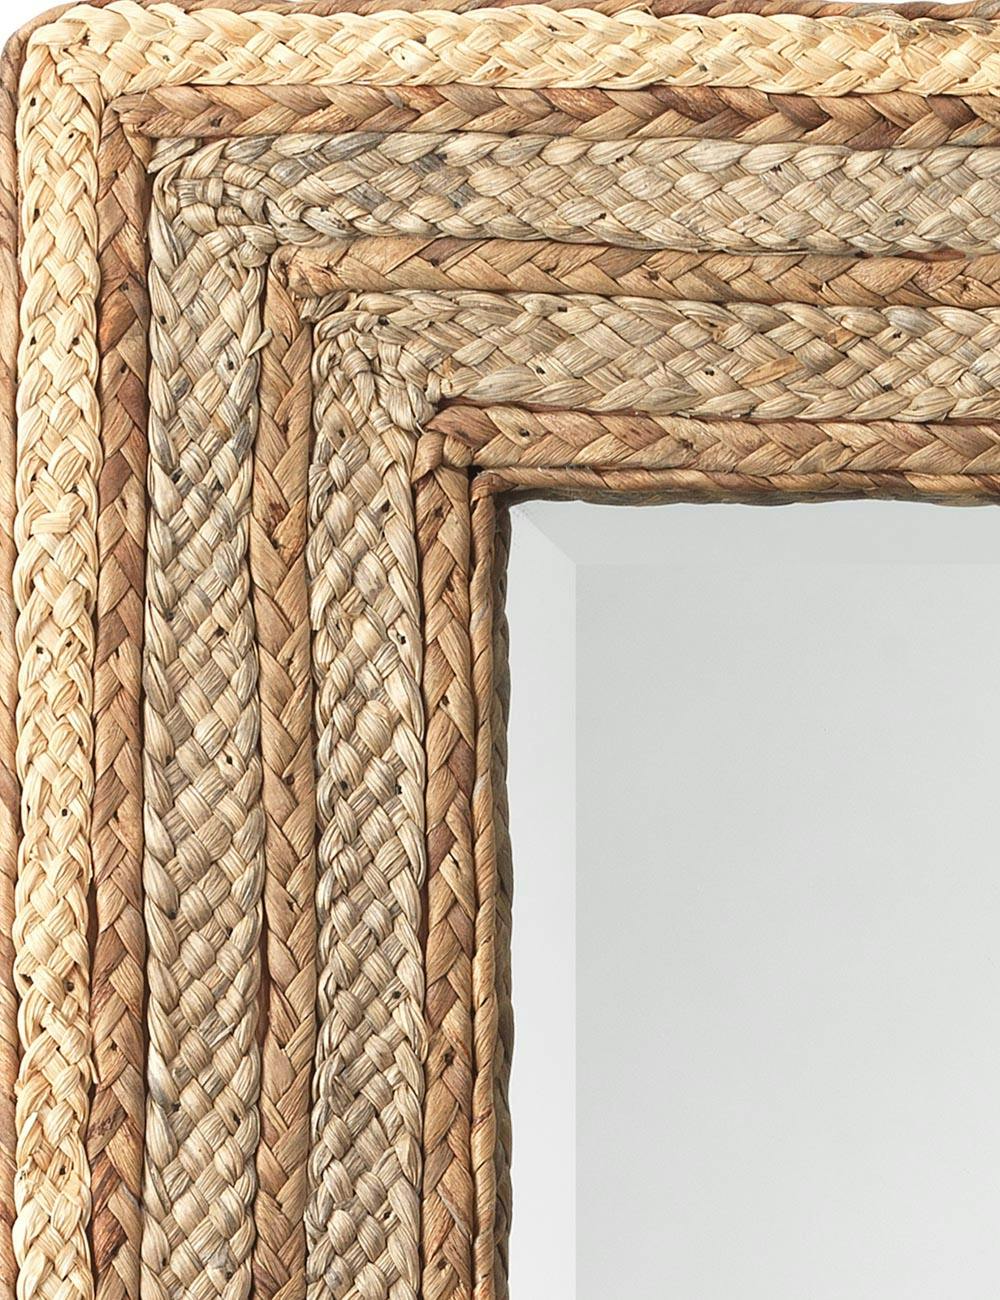 Evergreen Hand-Braided Seagrass Full-Length Rectangular Mirror